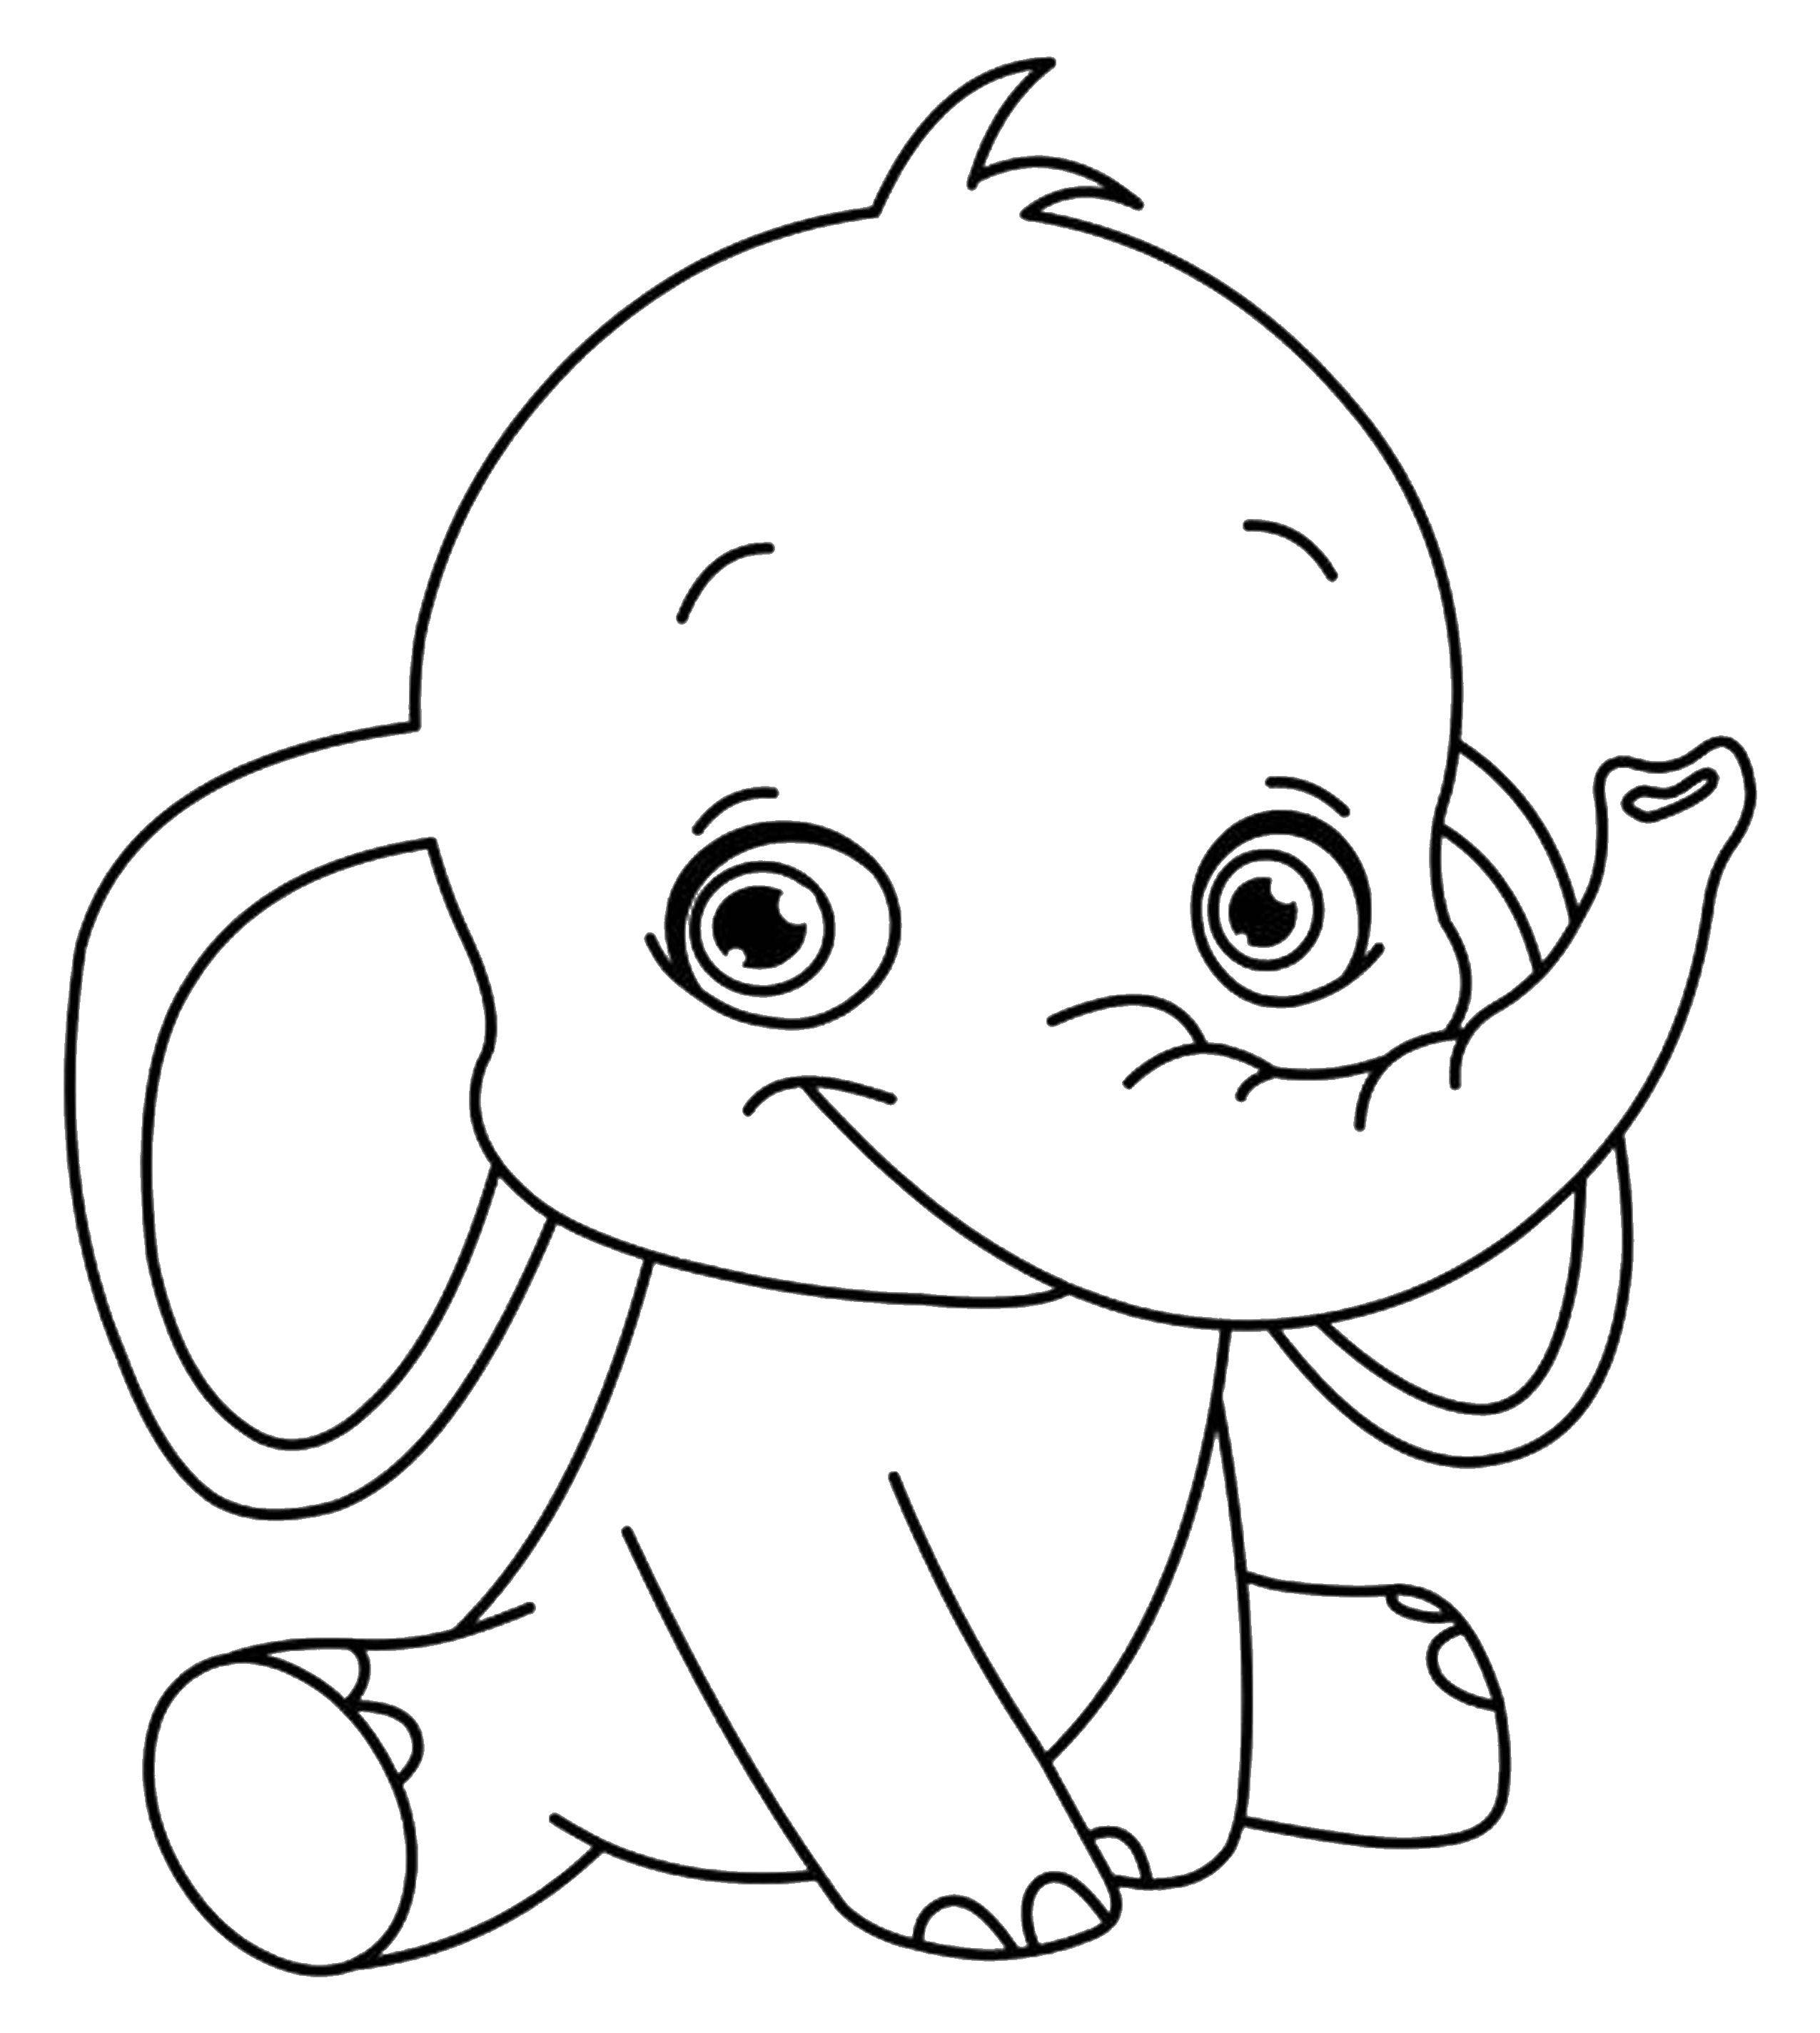 Coloring Elephant. Category Animals. Tags:  animals, elephants, baby elephants.